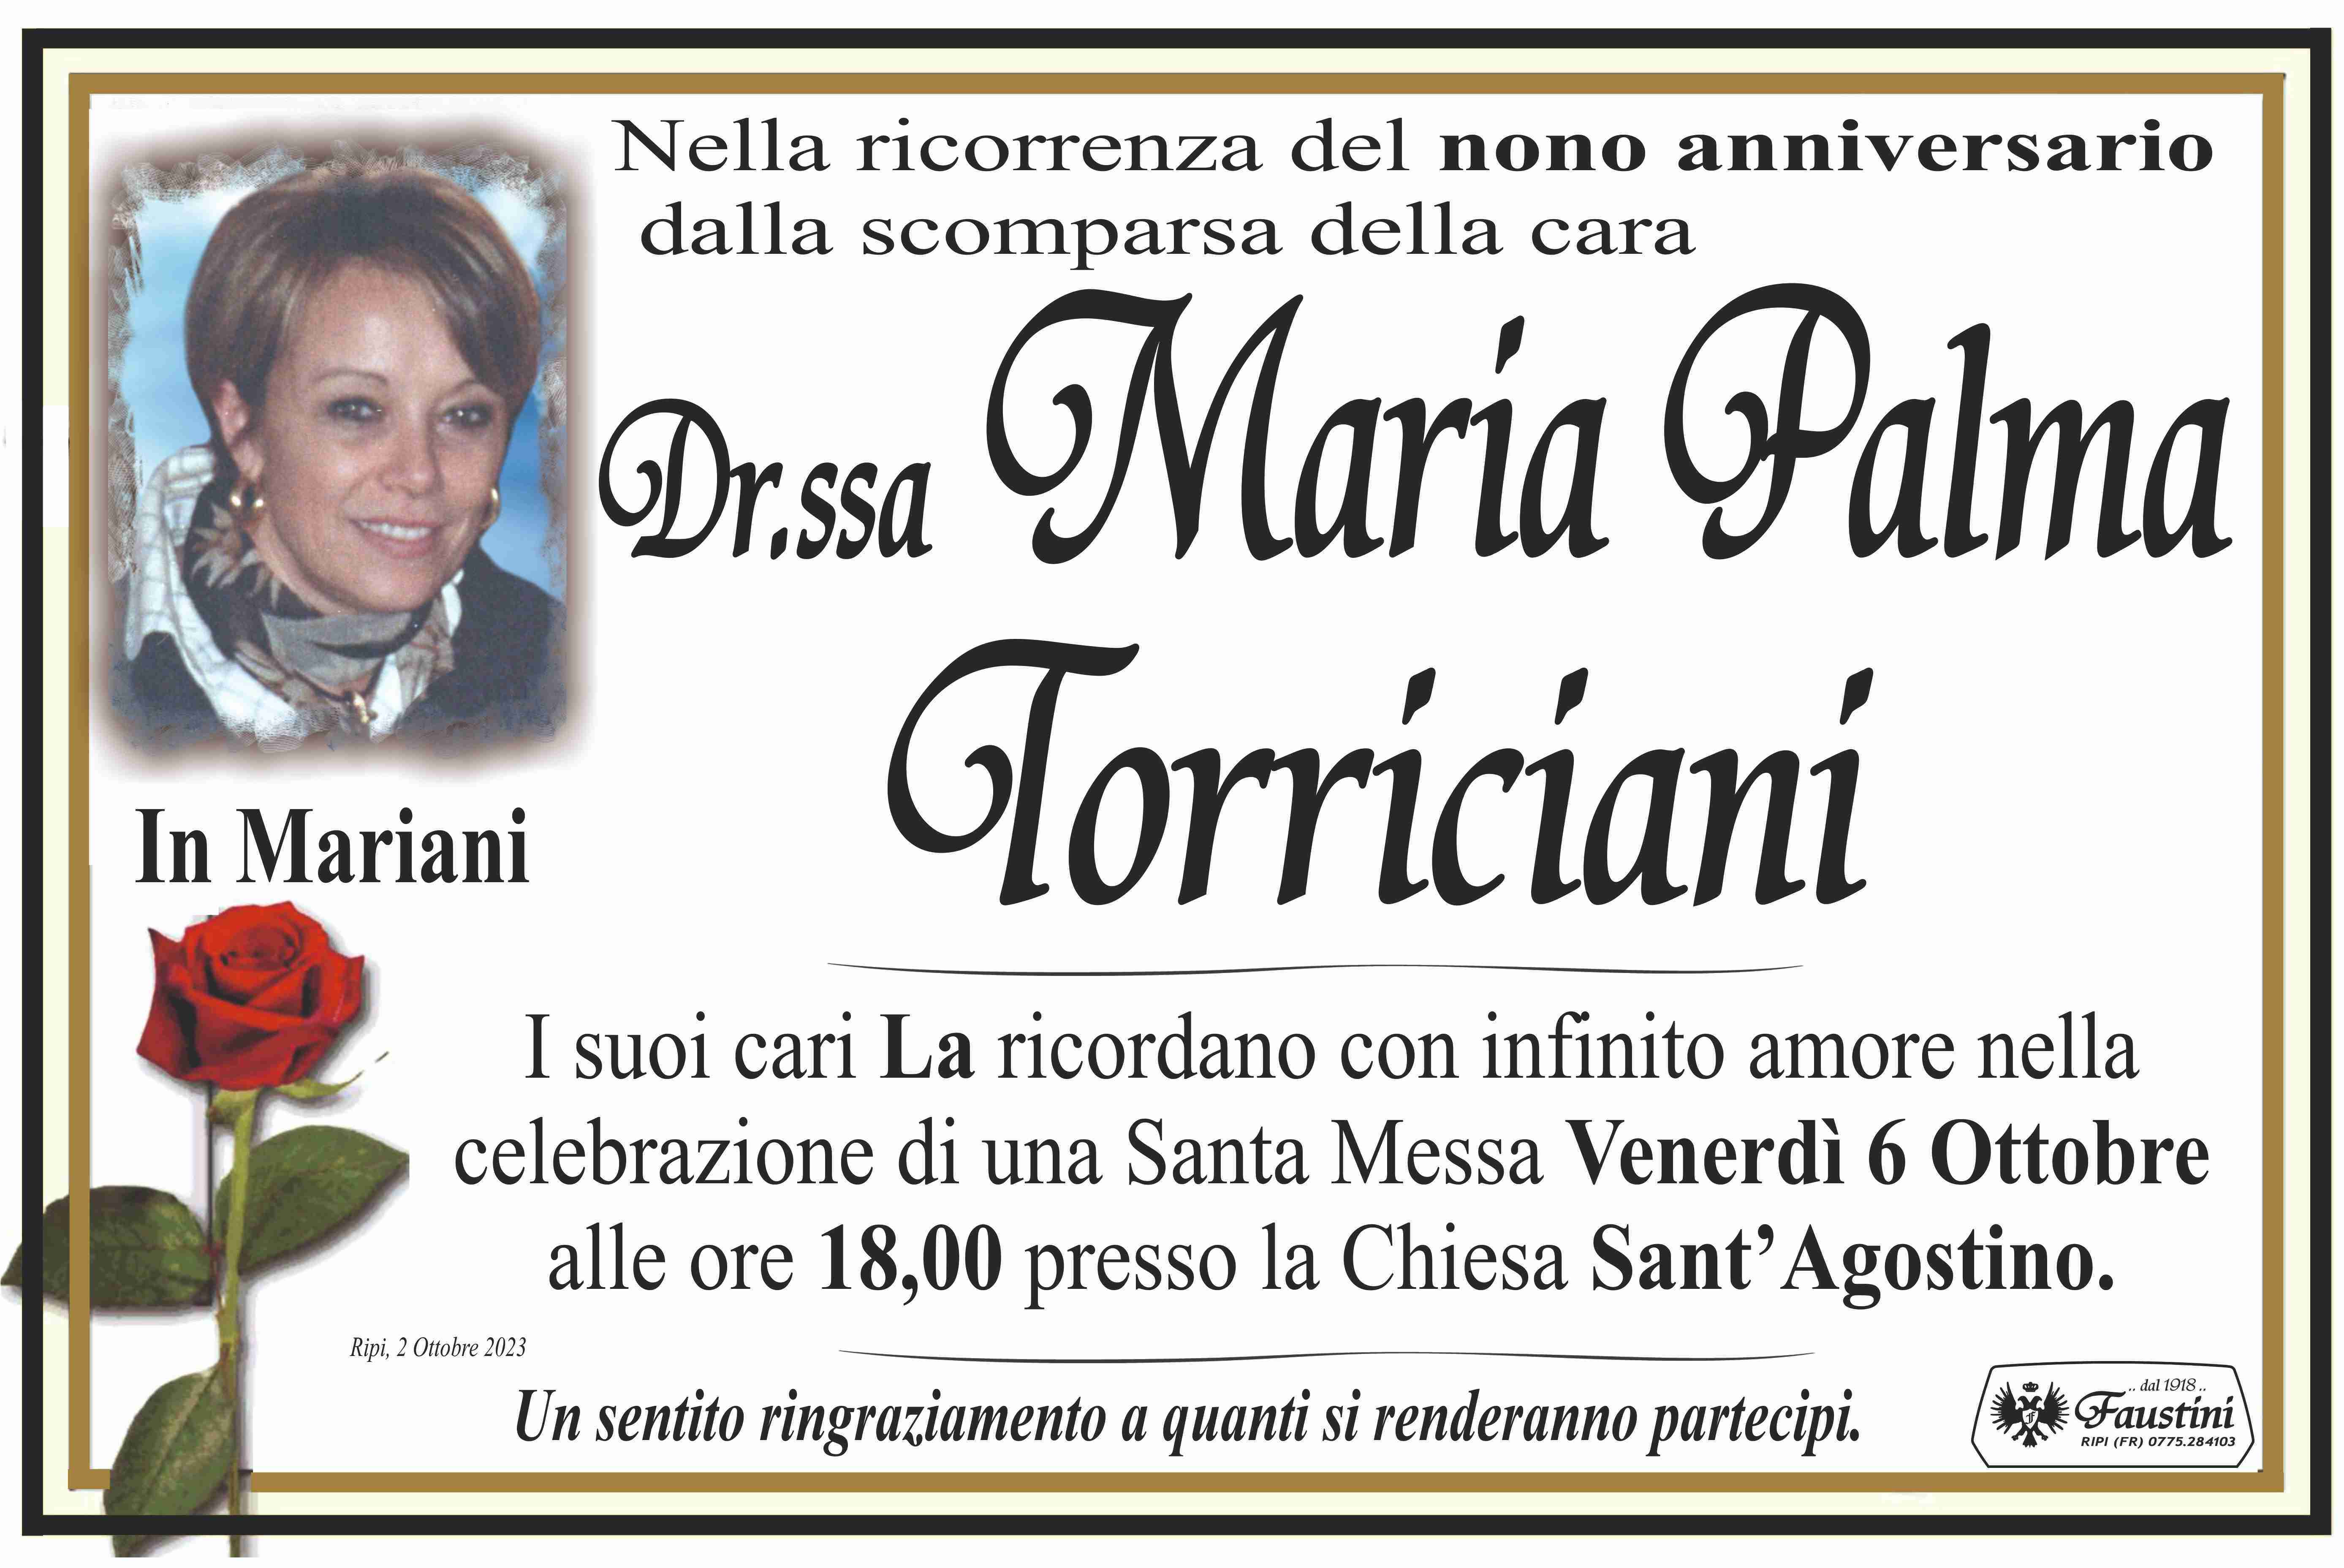 Dr.ssa Maria Palma Torriciani